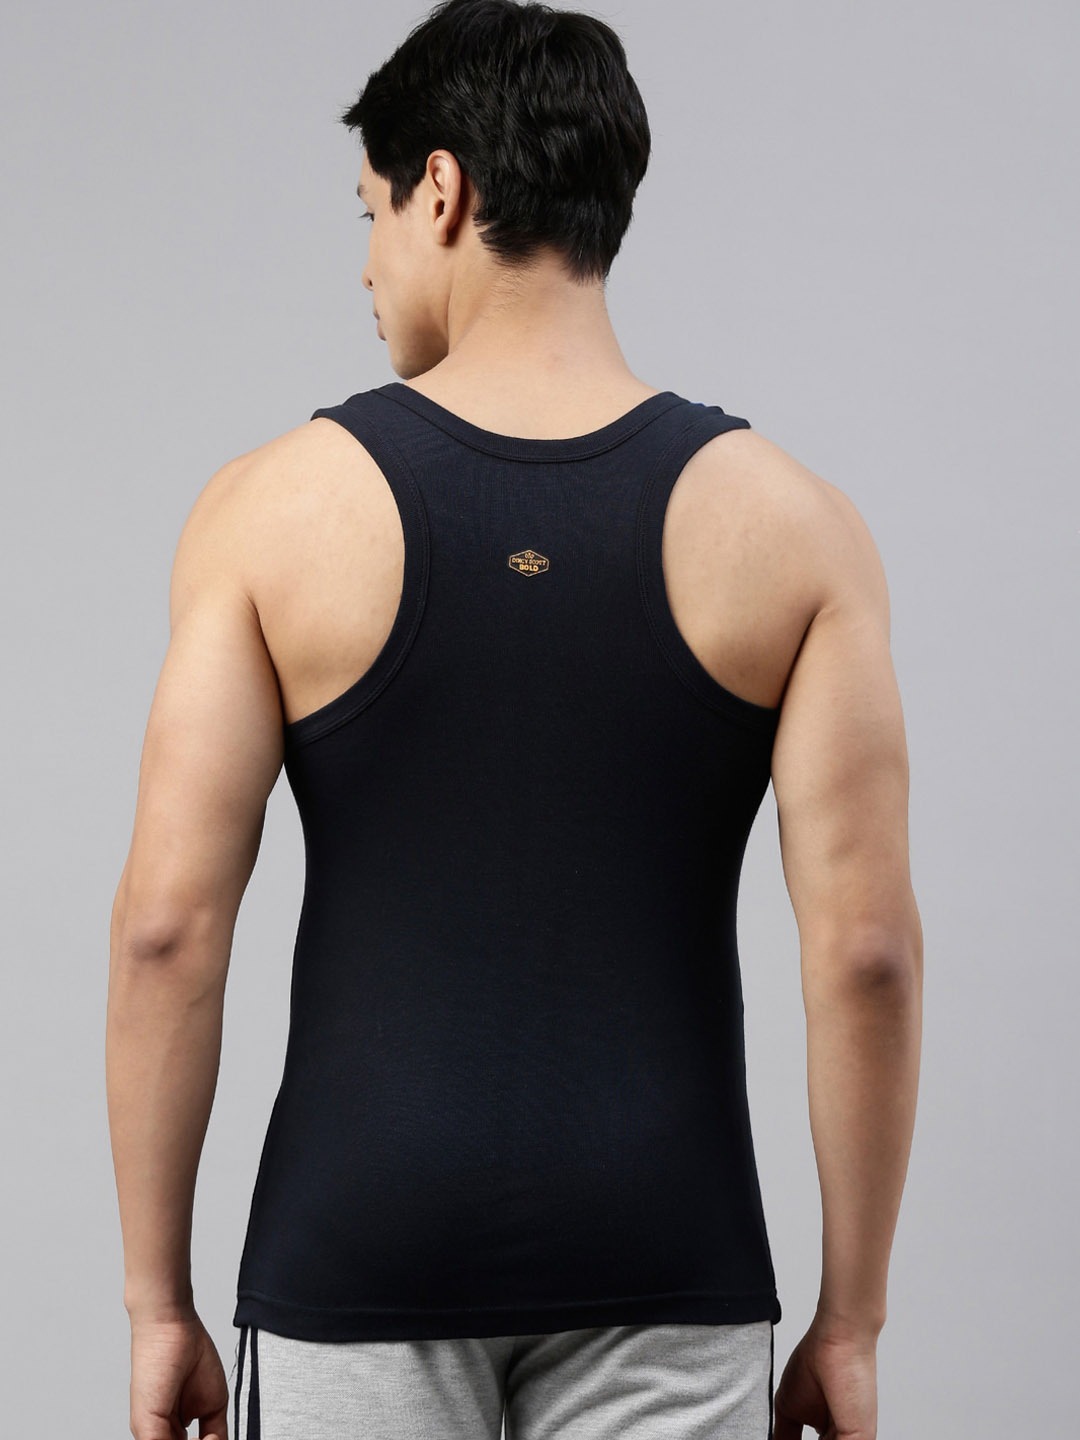 Clothing Innerwear Vests | DIXCY SCOTT Men Black & Navy Blue Solid Cotton Innerwear Gym Vests Pack Of 2 - FF61386